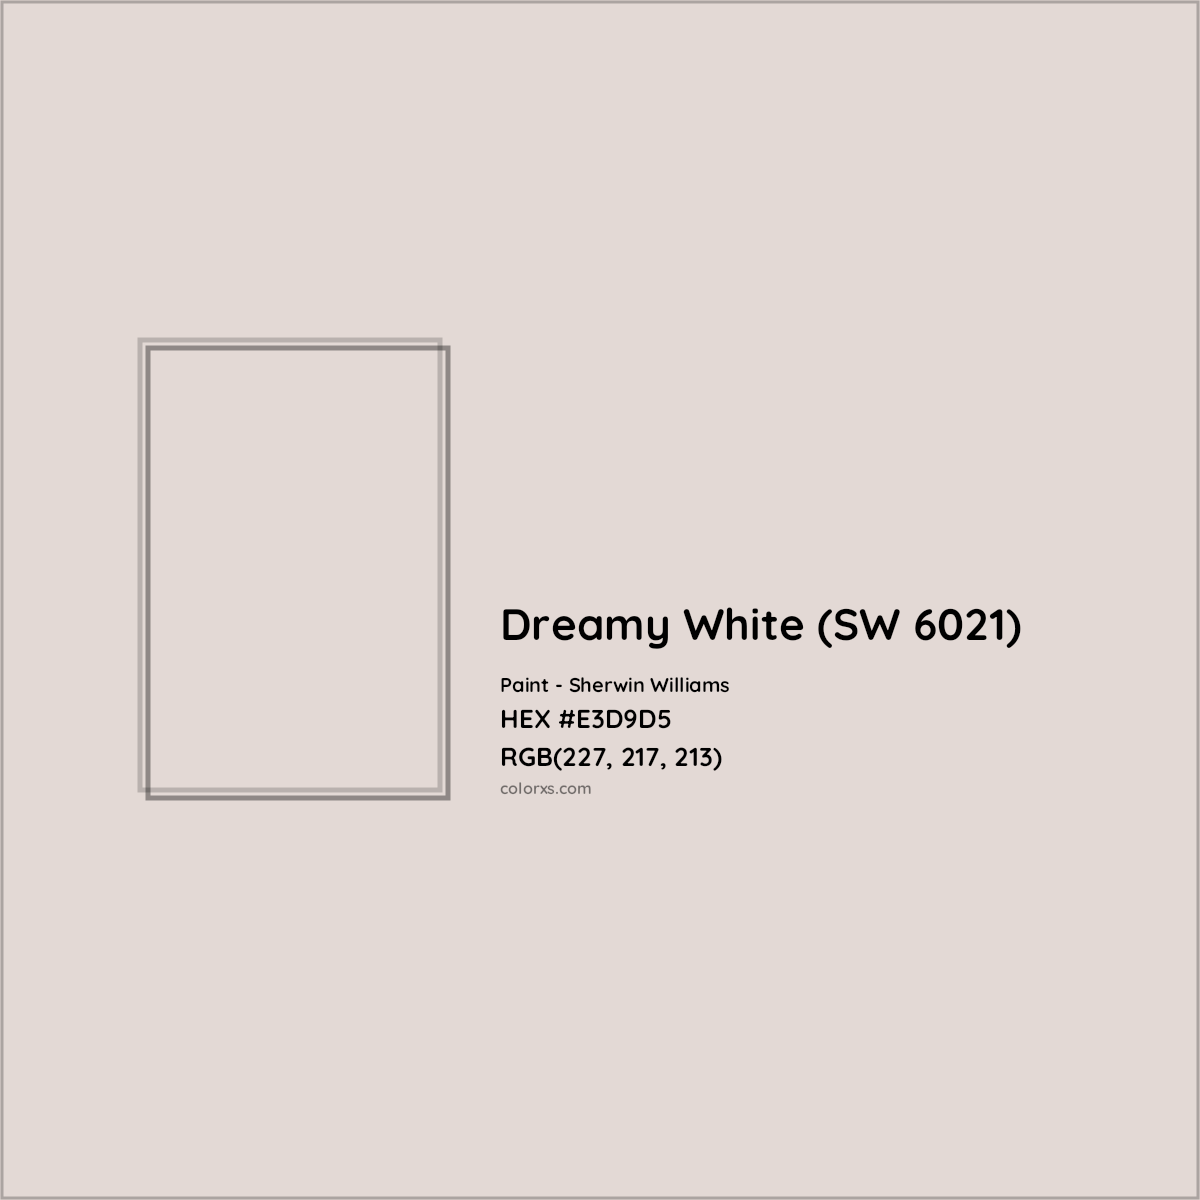 HEX #E3D9D5 Dreamy White (SW 6021) Paint Sherwin Williams - Color Code